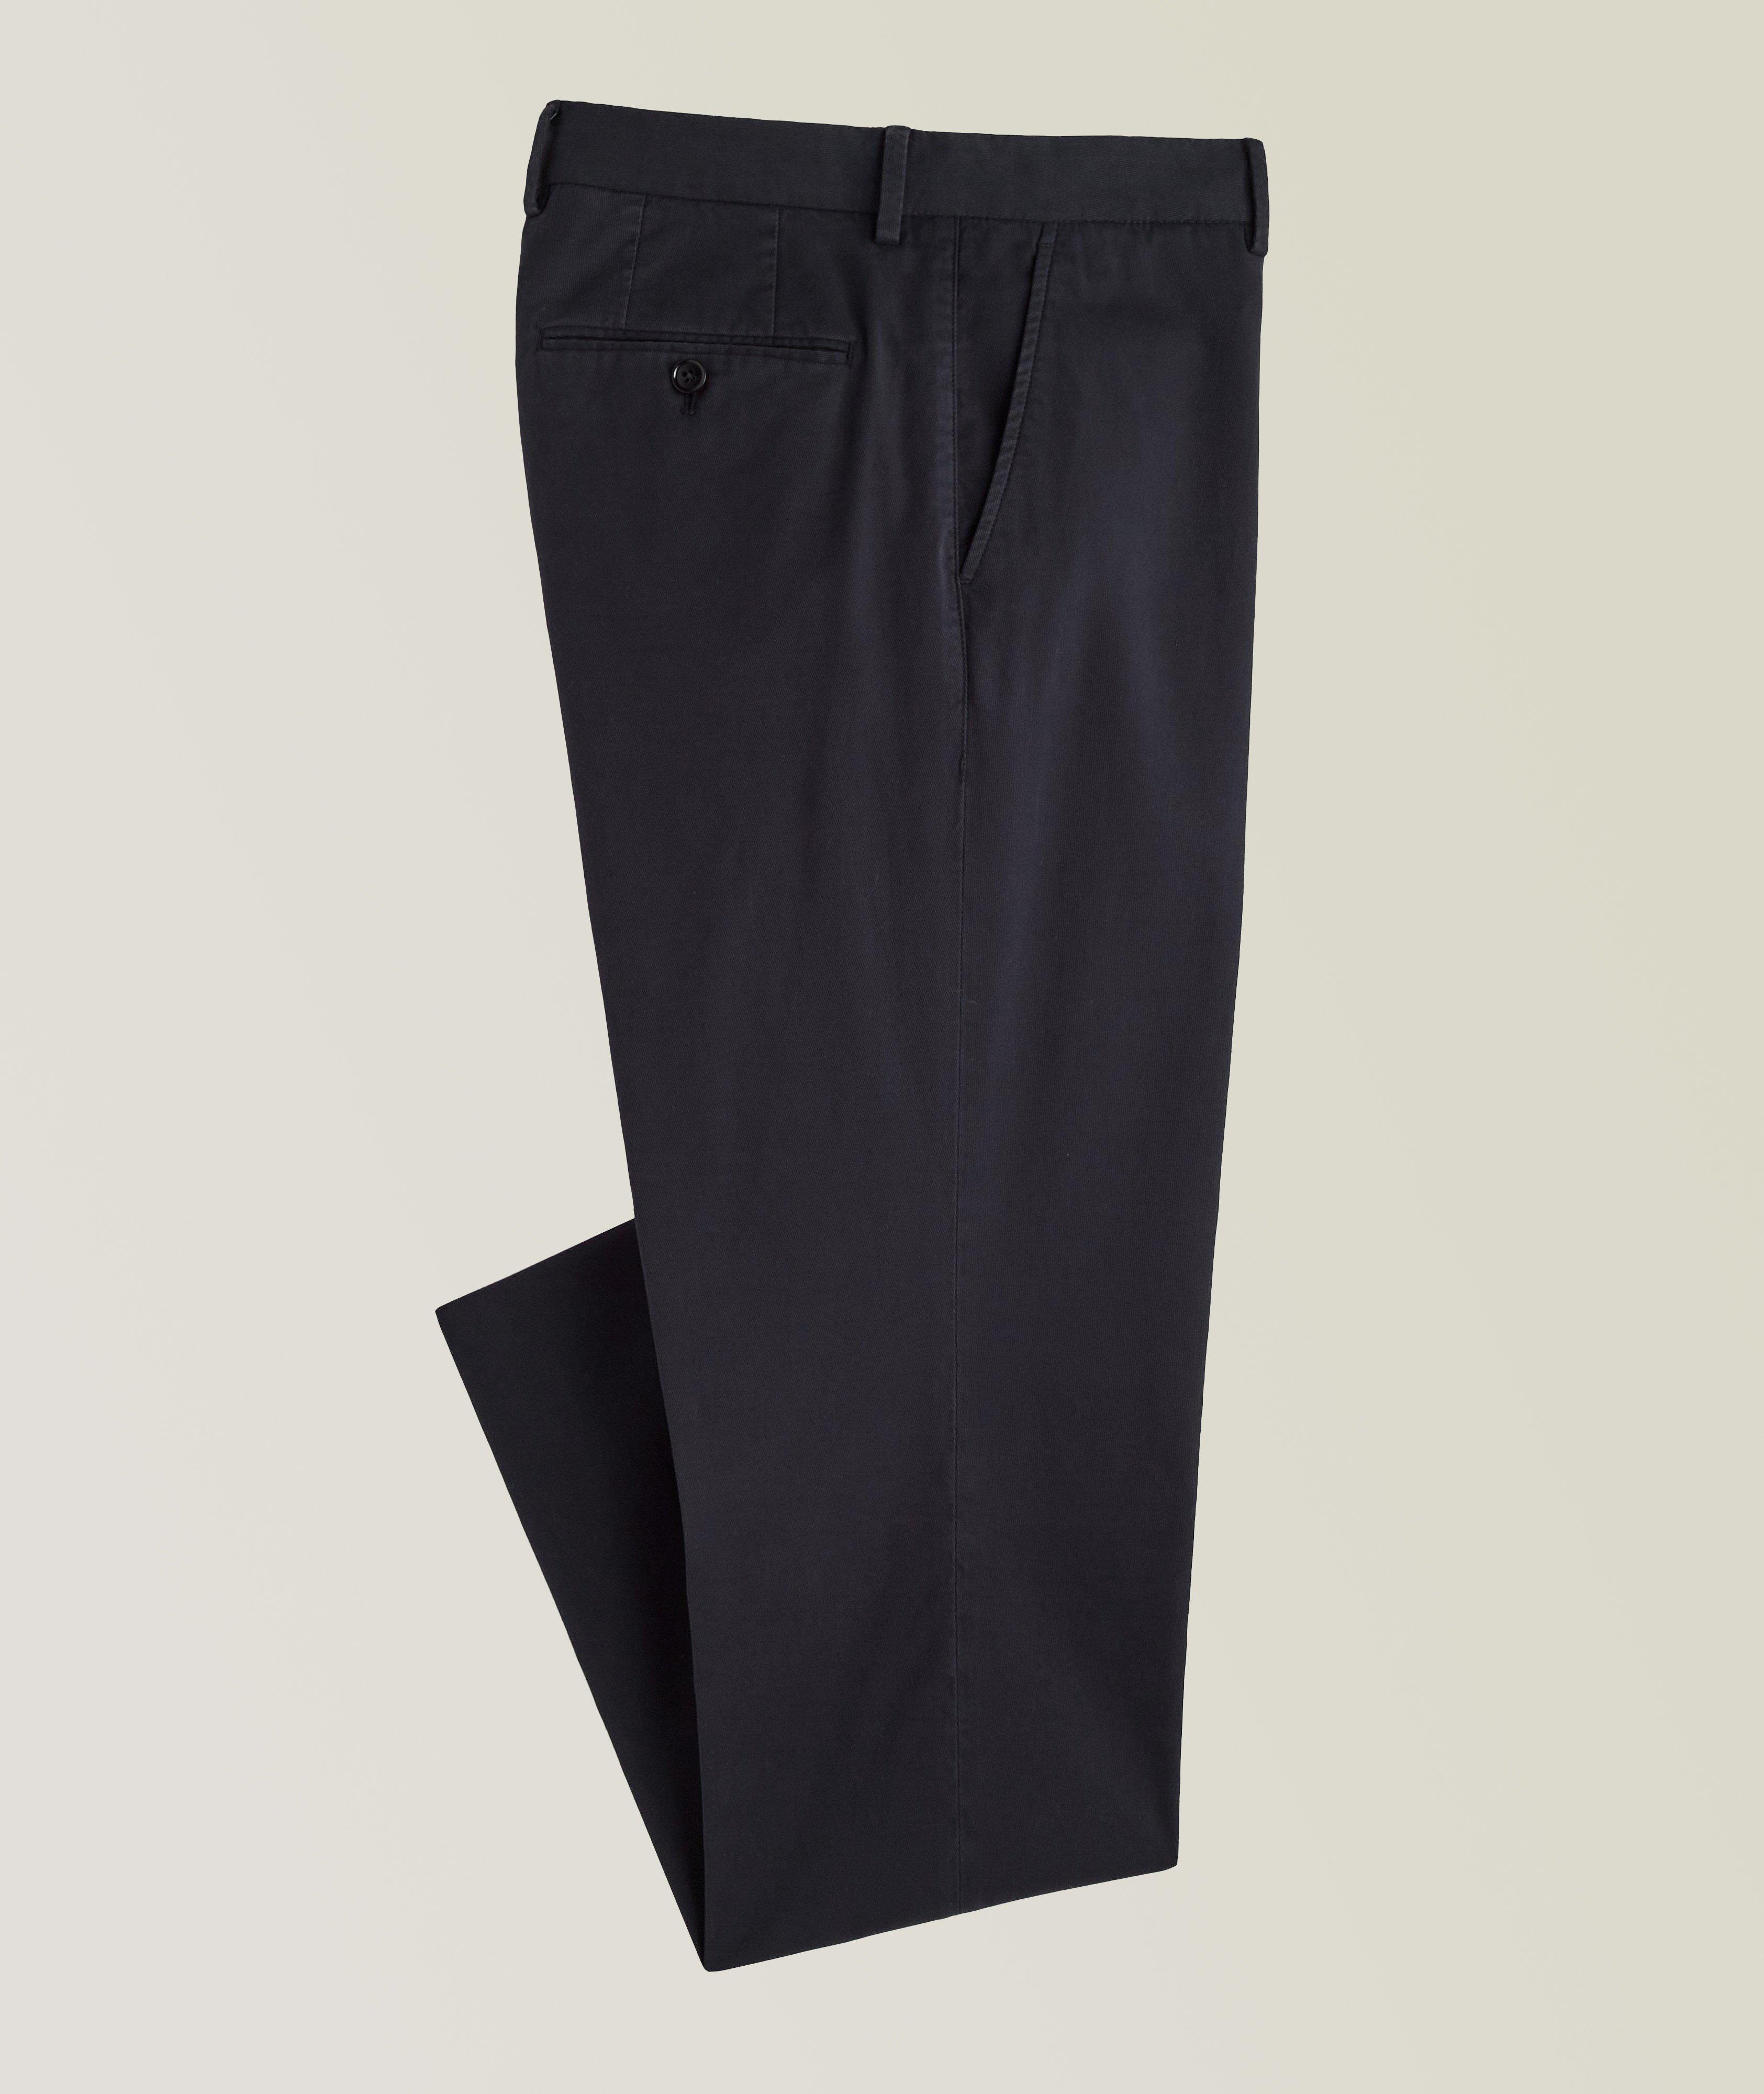 Zegna Slim Fit Dress Pants | Pants | Final Cut